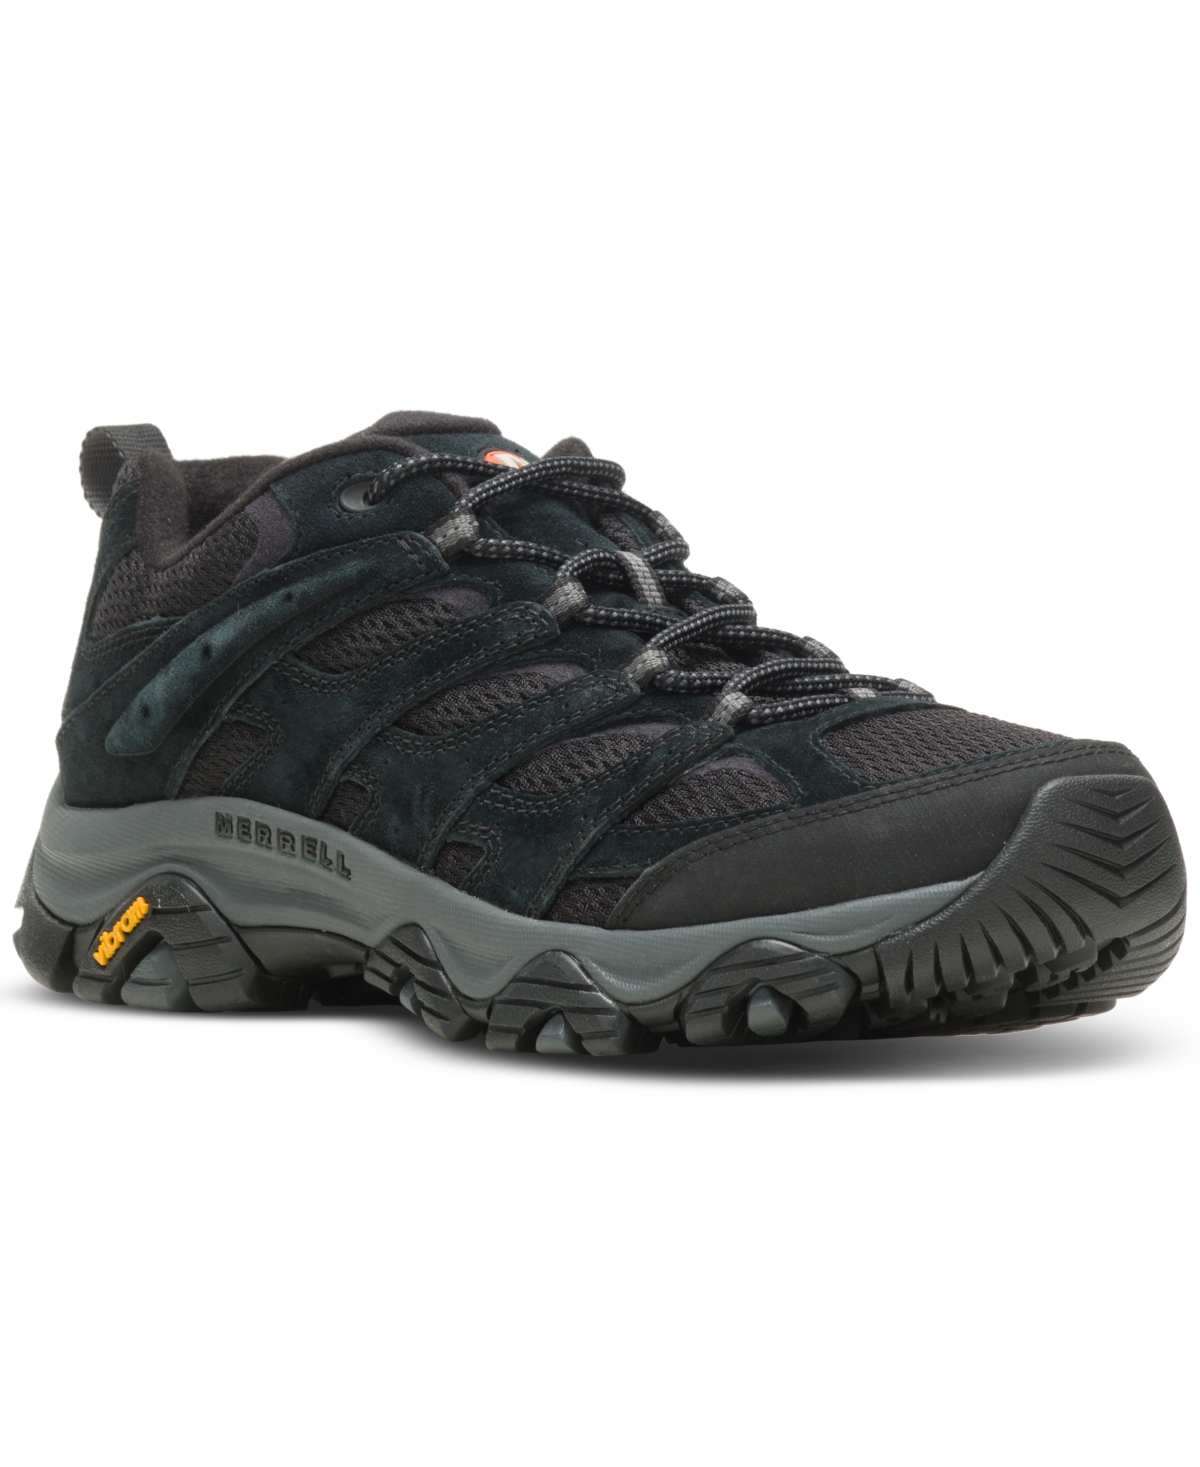 Men's Moab 3 Lace-Up Hiking Shoes - Black Night